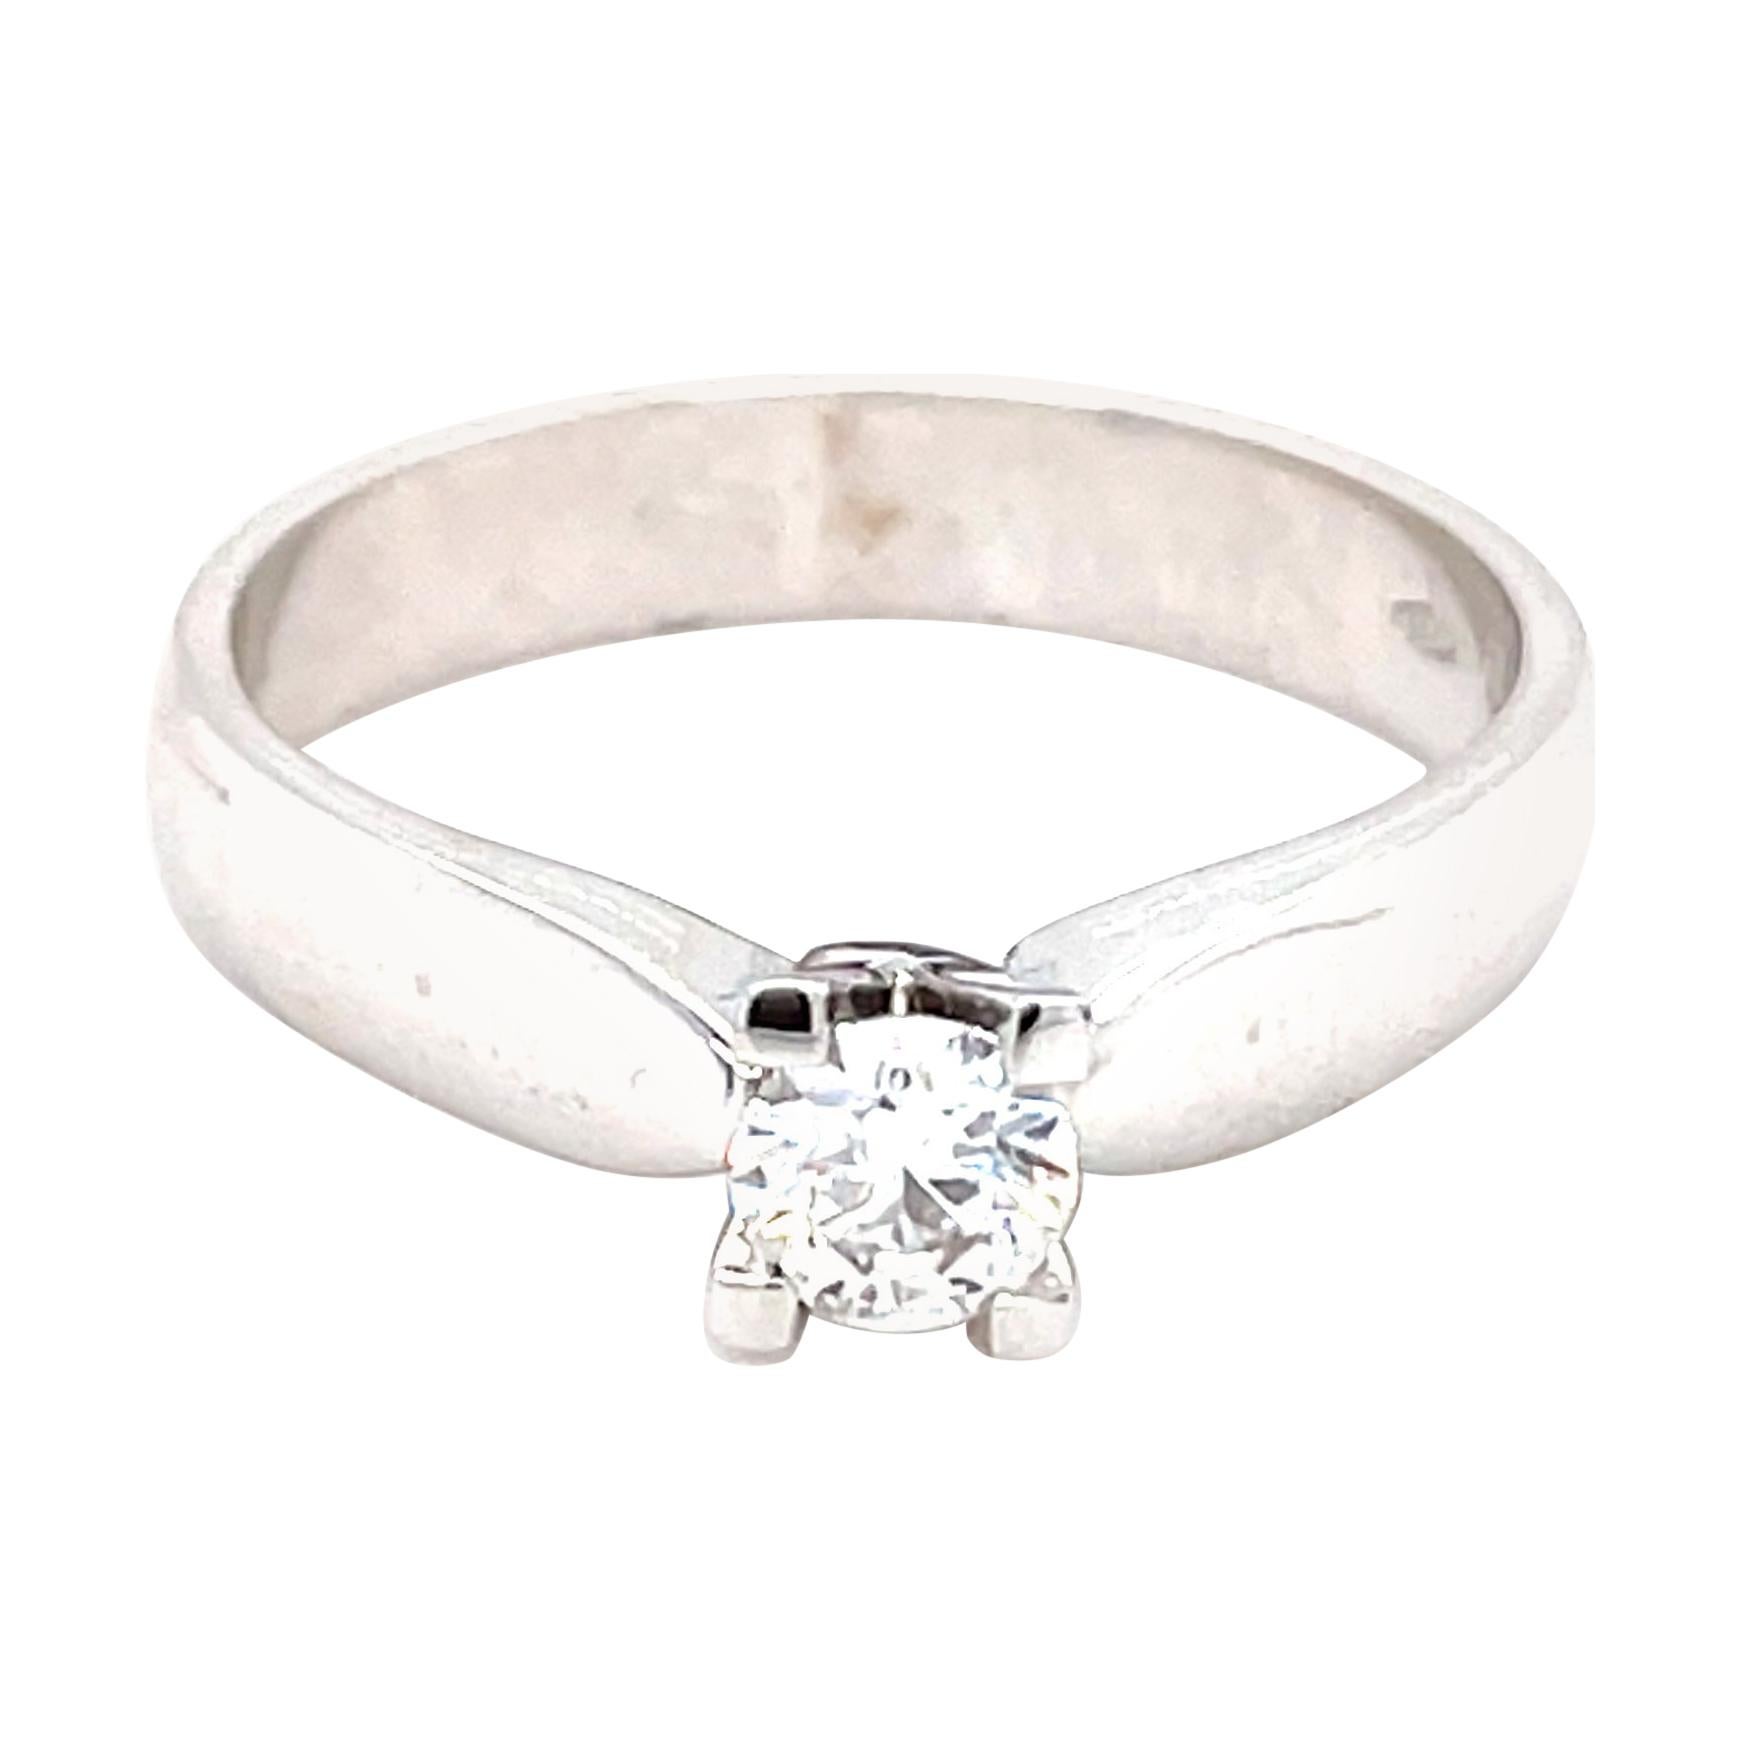 18 Karat White Gold Diamond Solitaire Ring For Sale